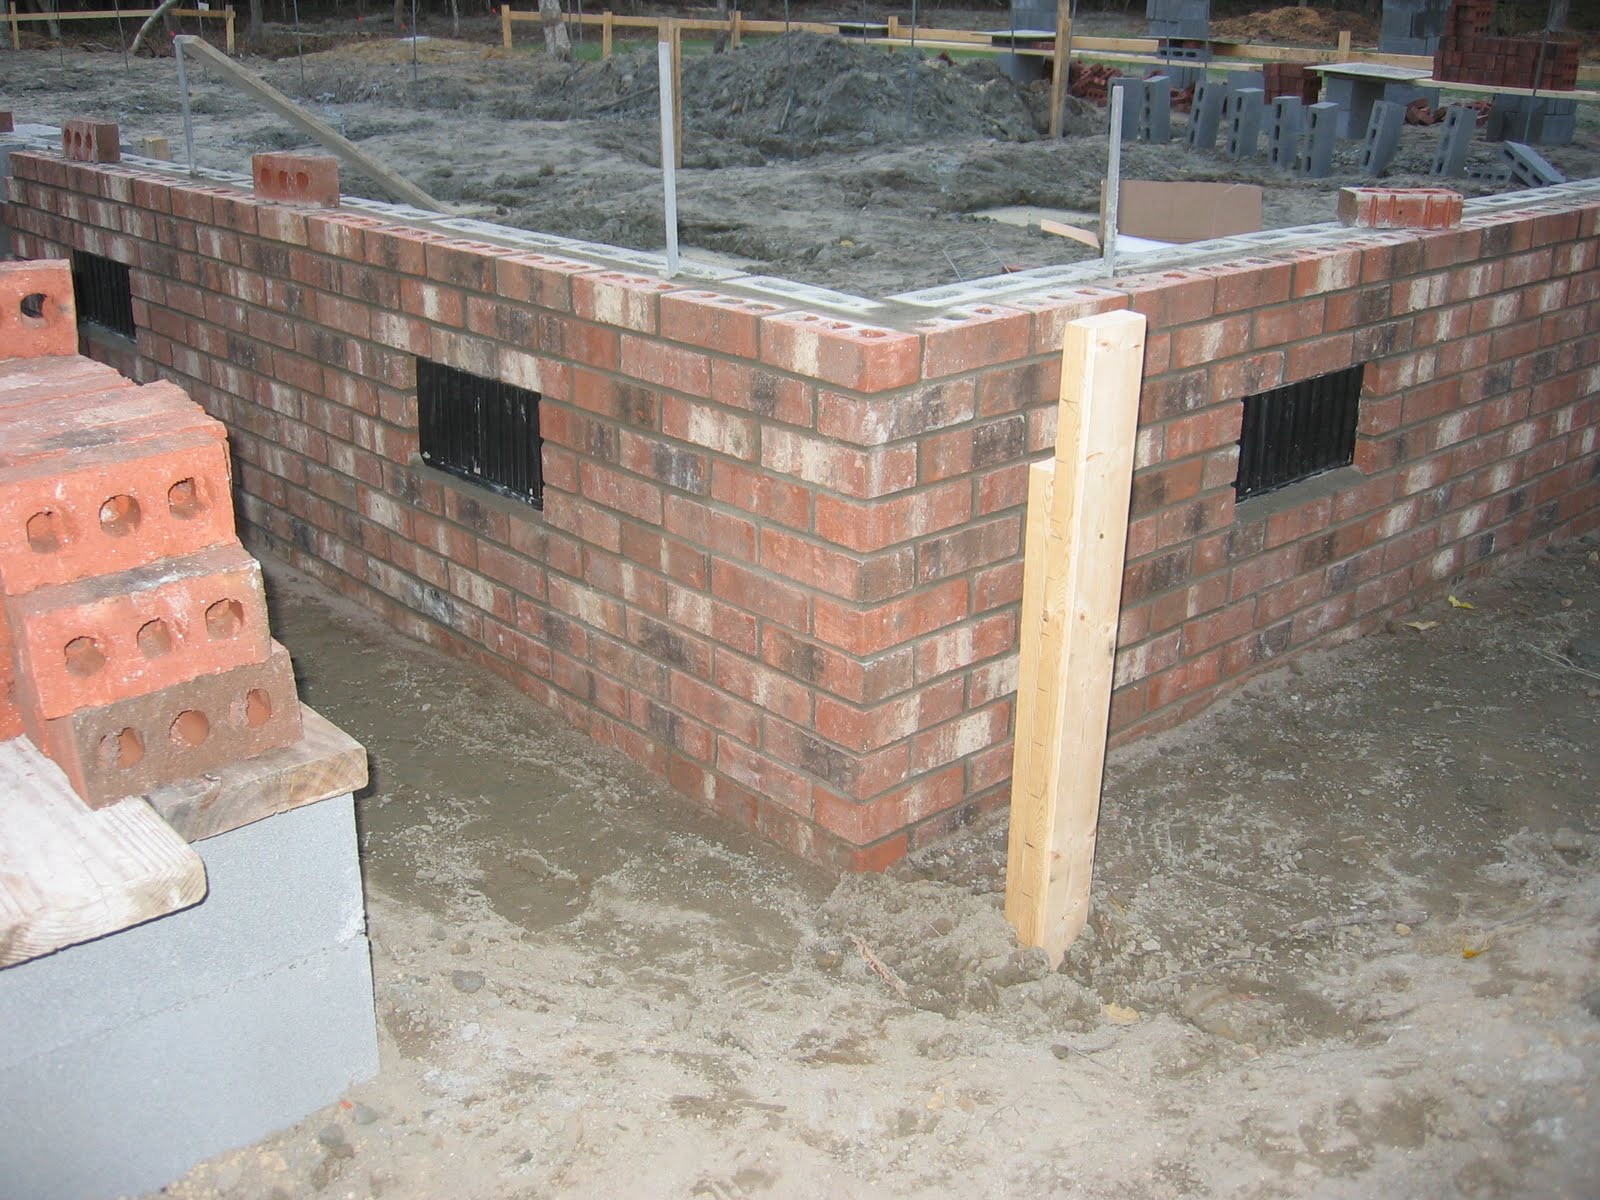 215 Ash Lane: Brick foundation